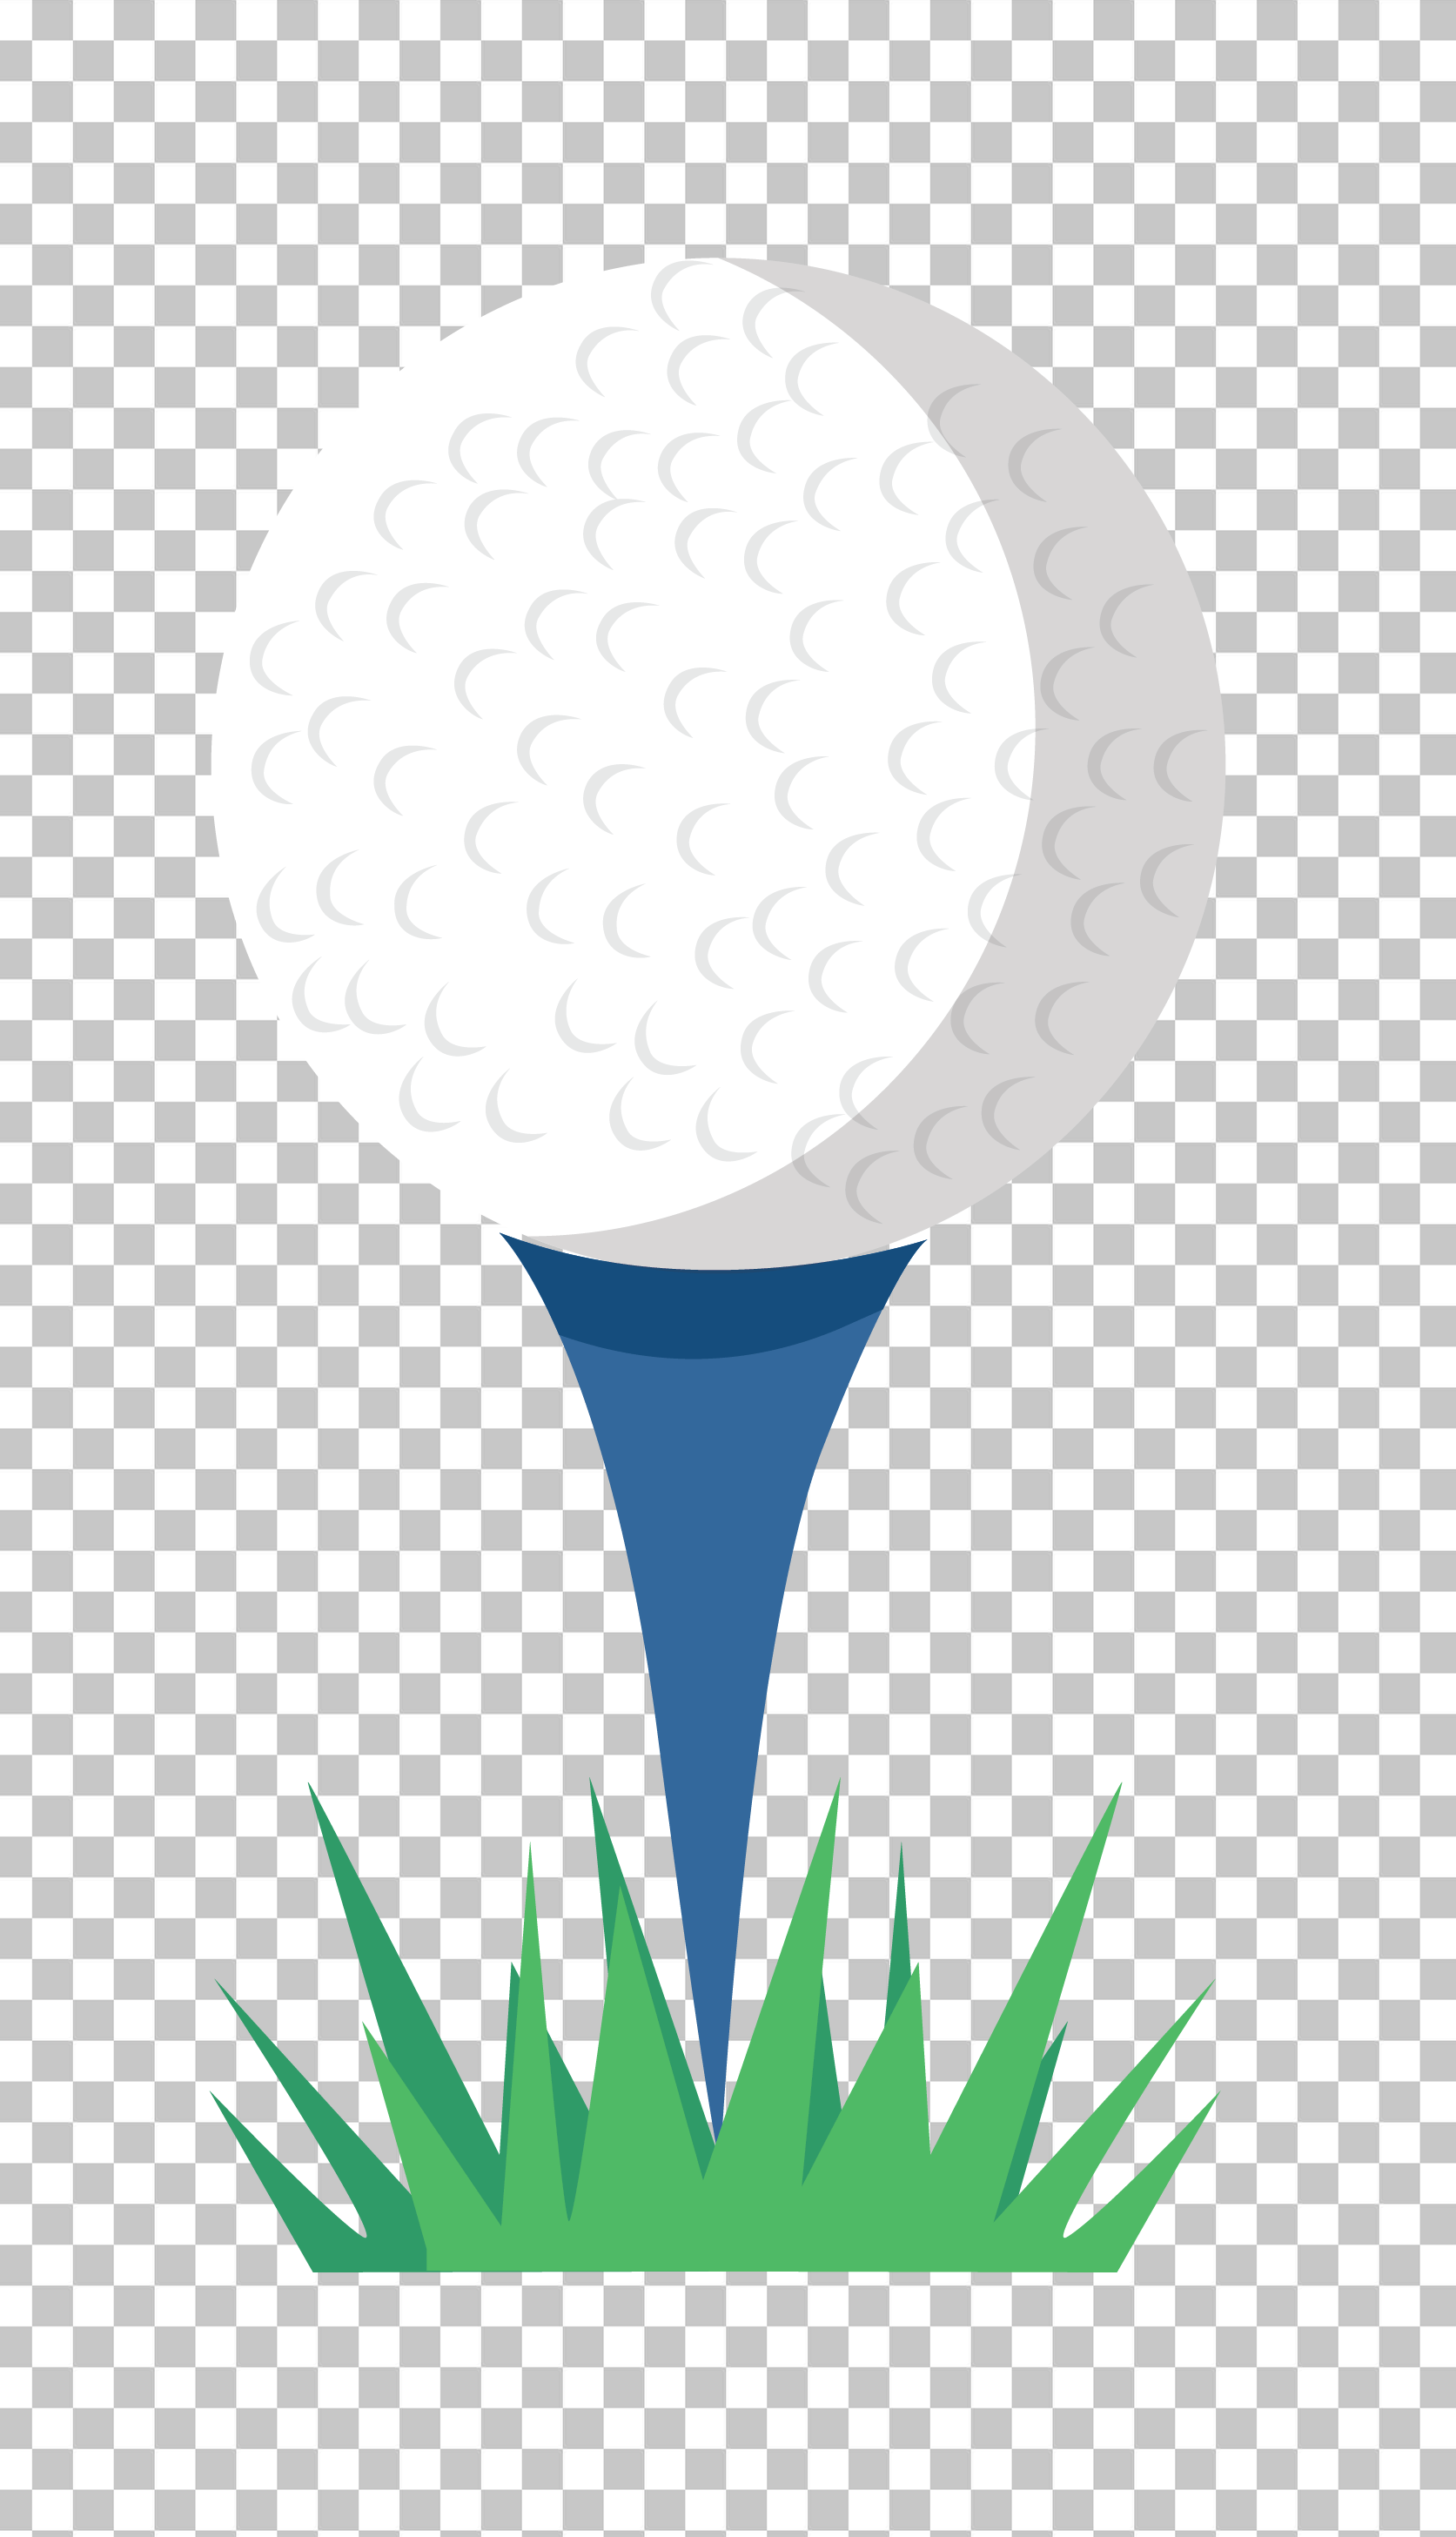 White Golf Ball on Blue Tee